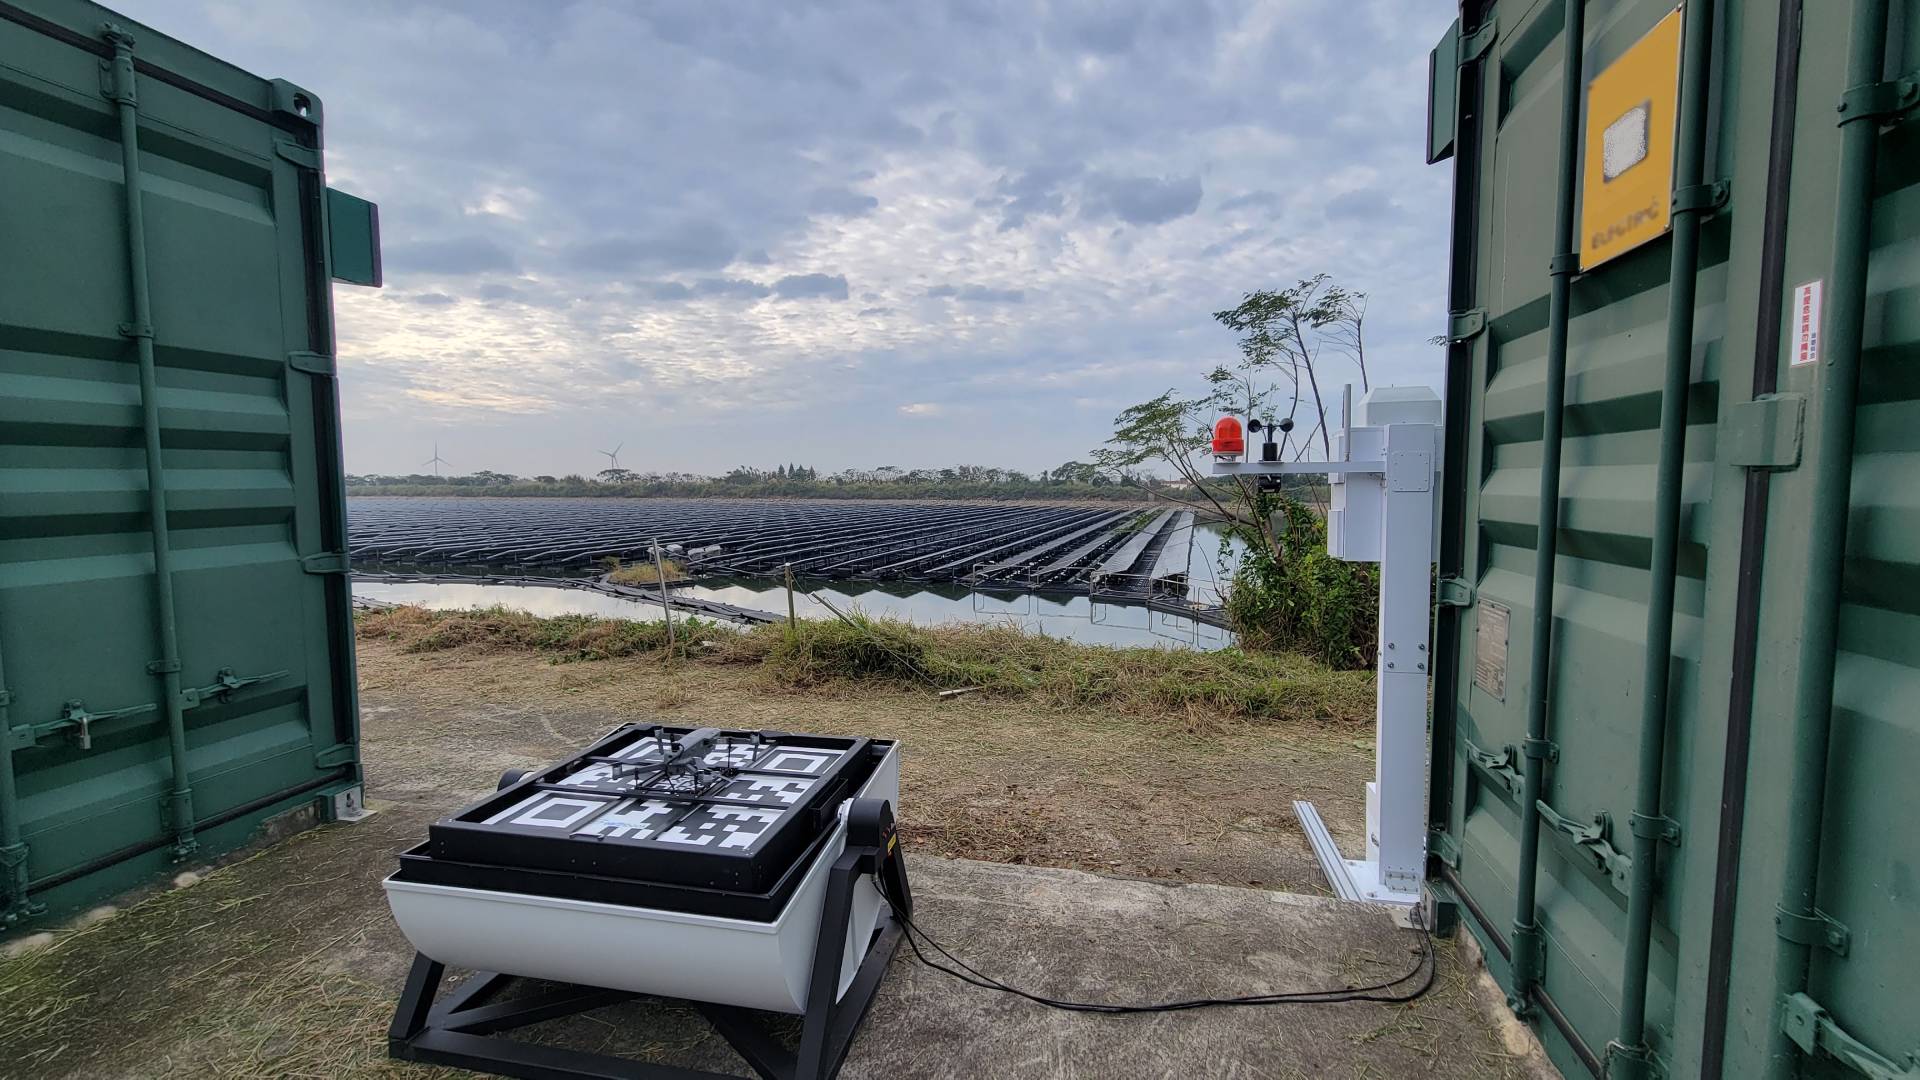 DStation F80 autonomous drone for floating solar farm inspection in Taiwan